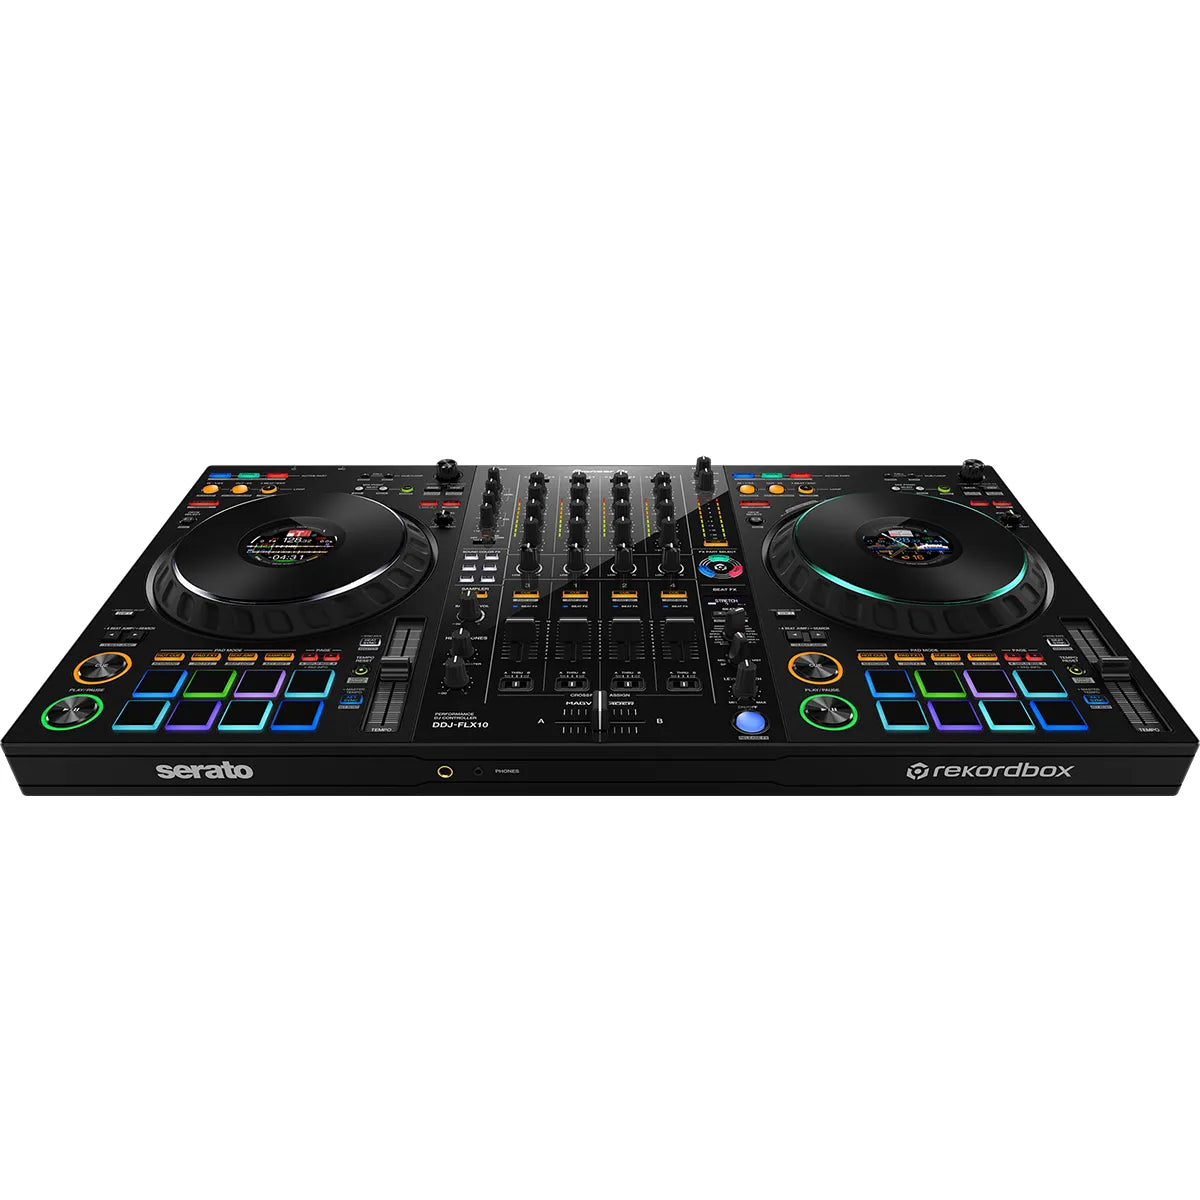 PIONEER DDJ-FLX10 Controlador DJ de 4 canales para múltiples aplicaciones  de DJ (negro)